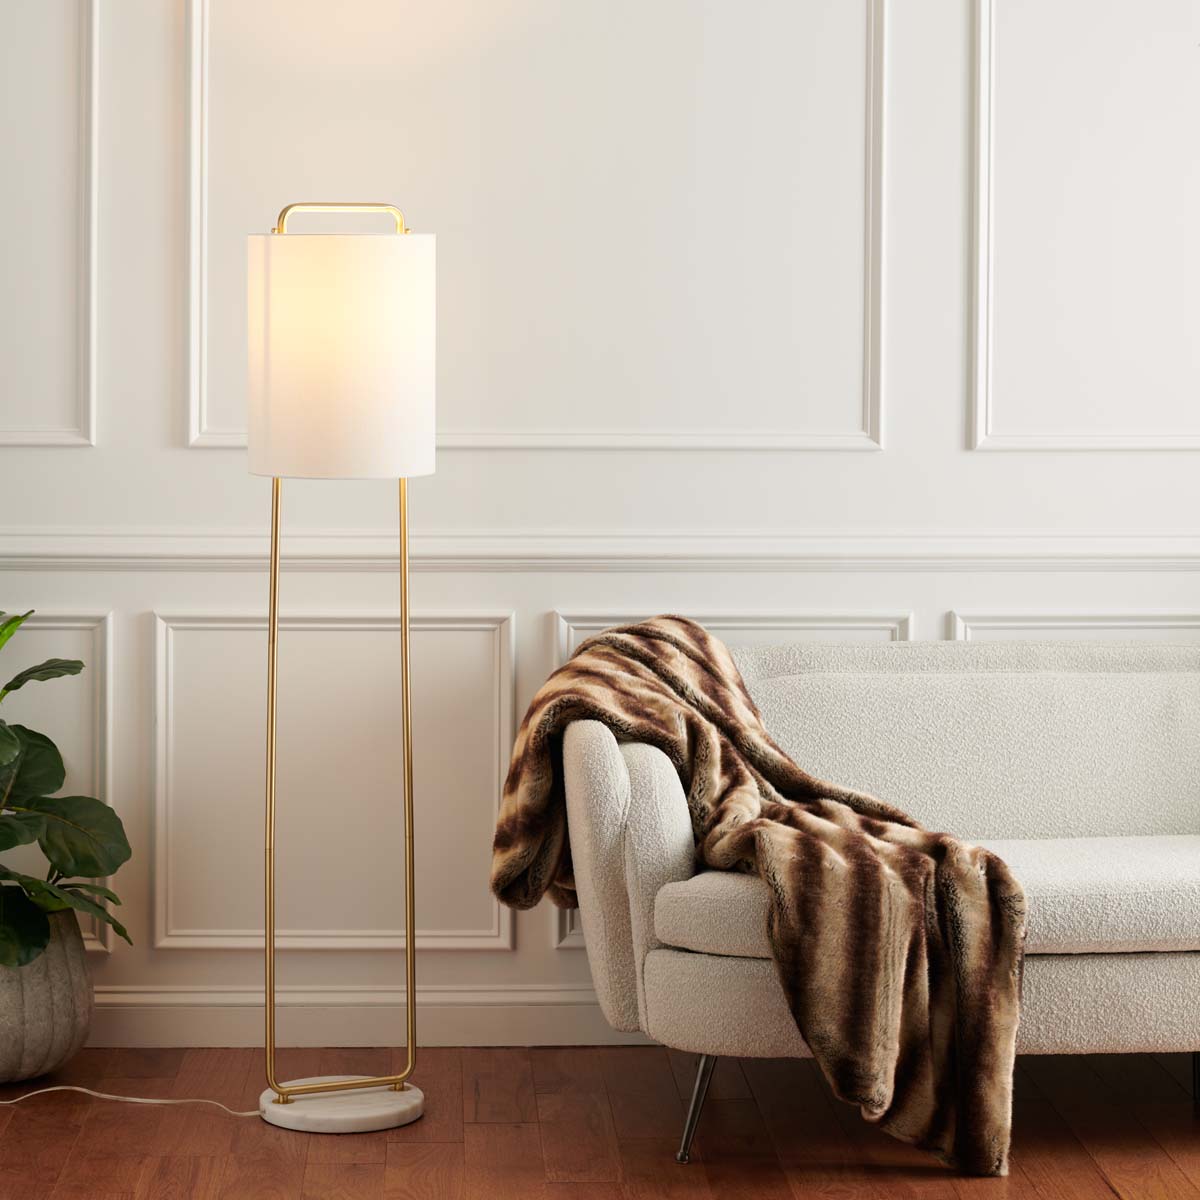 Safavieh Giulia Floor Lamp , FLL7006 - Gold